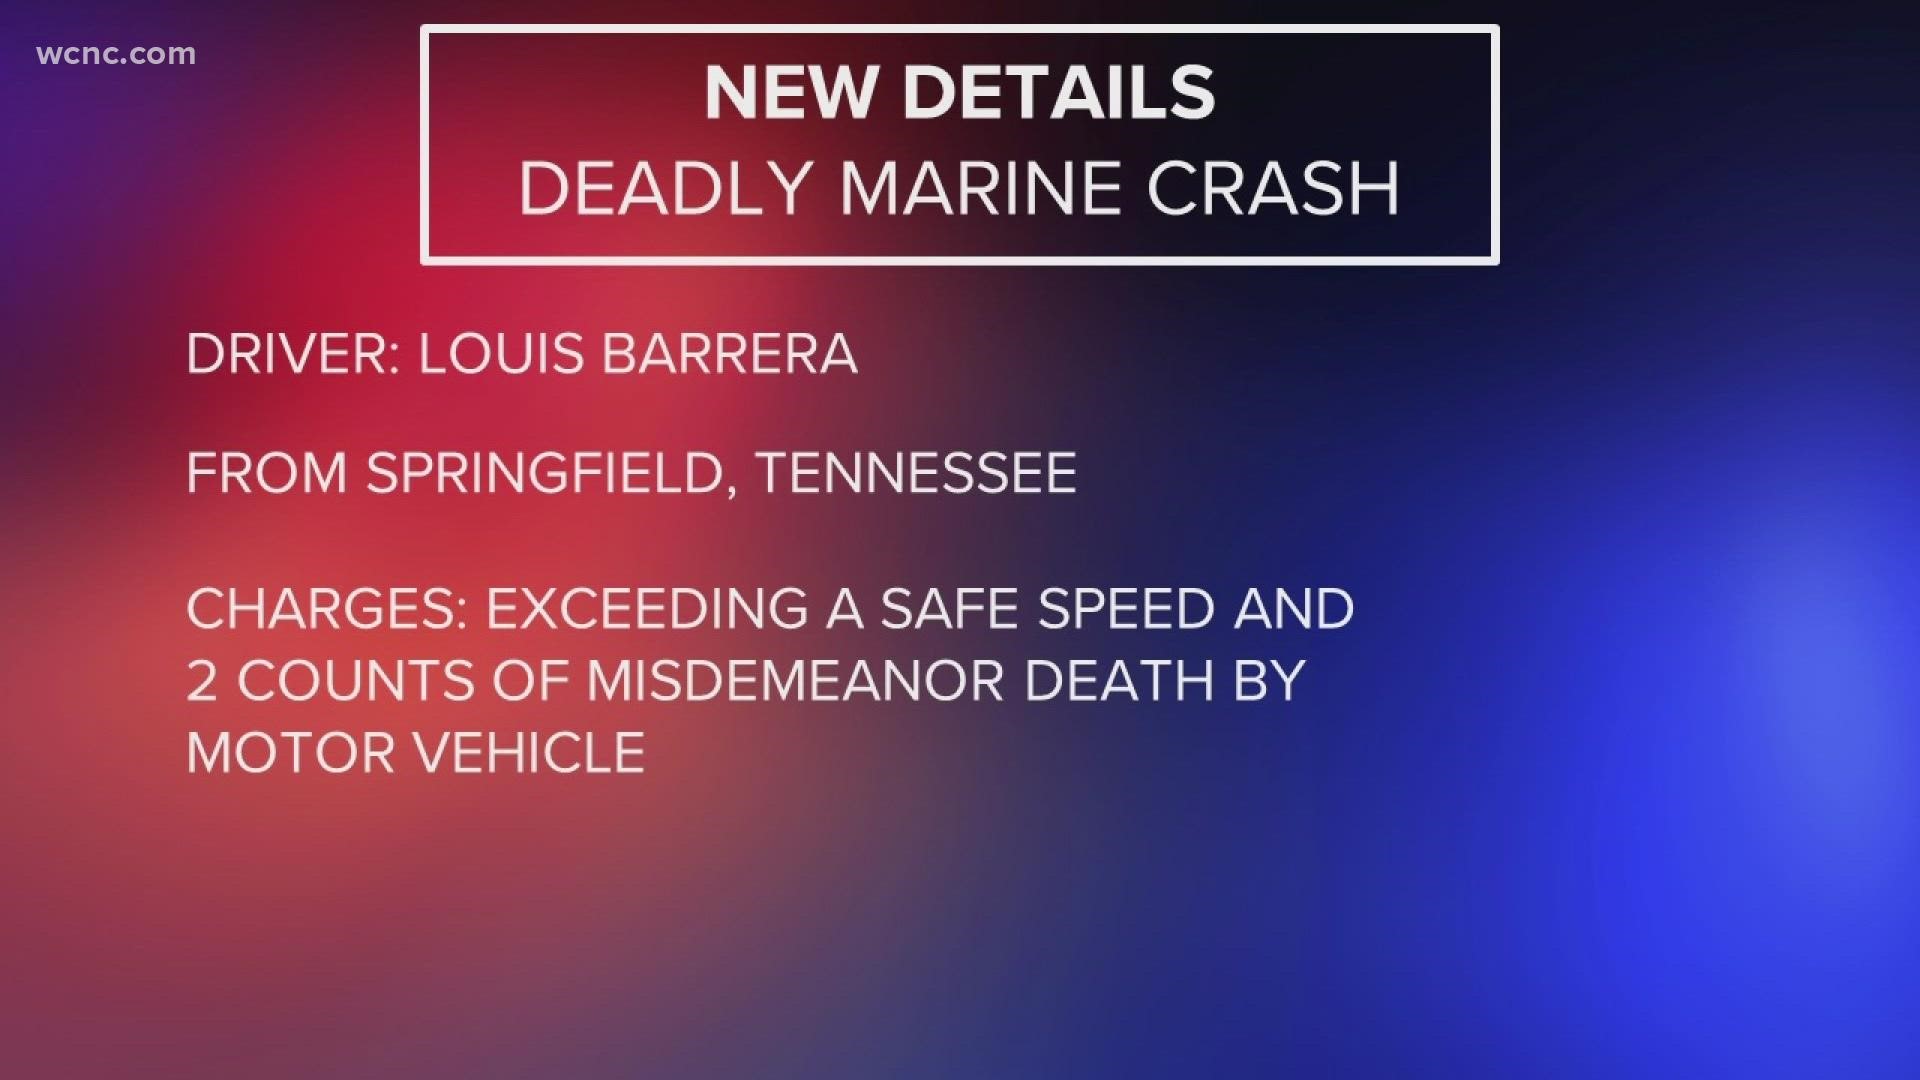 North Carolina State Highway Patrol is investigating after a deadly crash near Camp Lejeune in Jacksonville, North Carolina on Wednesday.